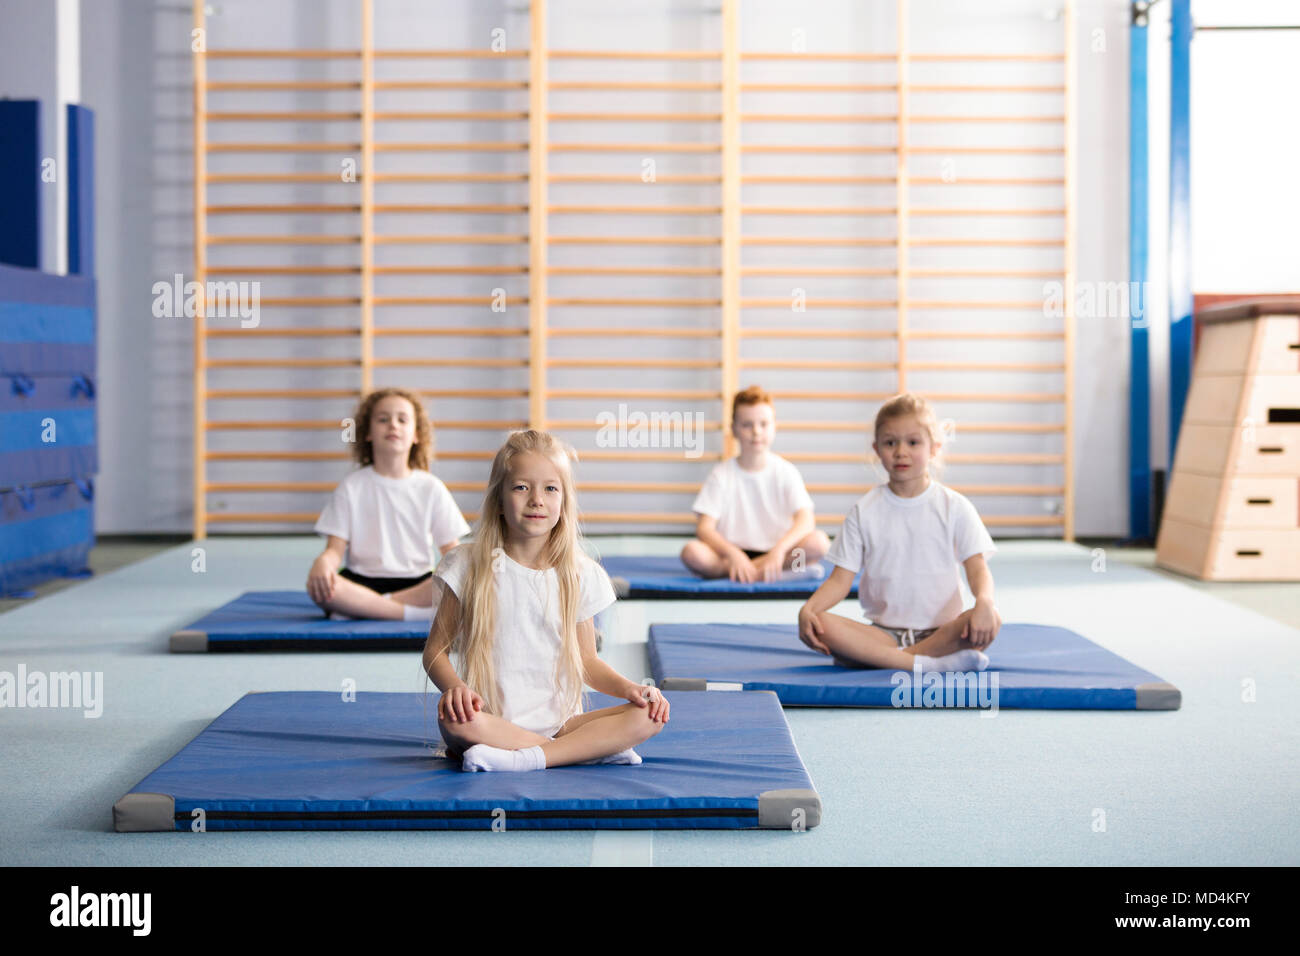 Kids sitting cross-legged on blue mats in the school gym Stock Photo